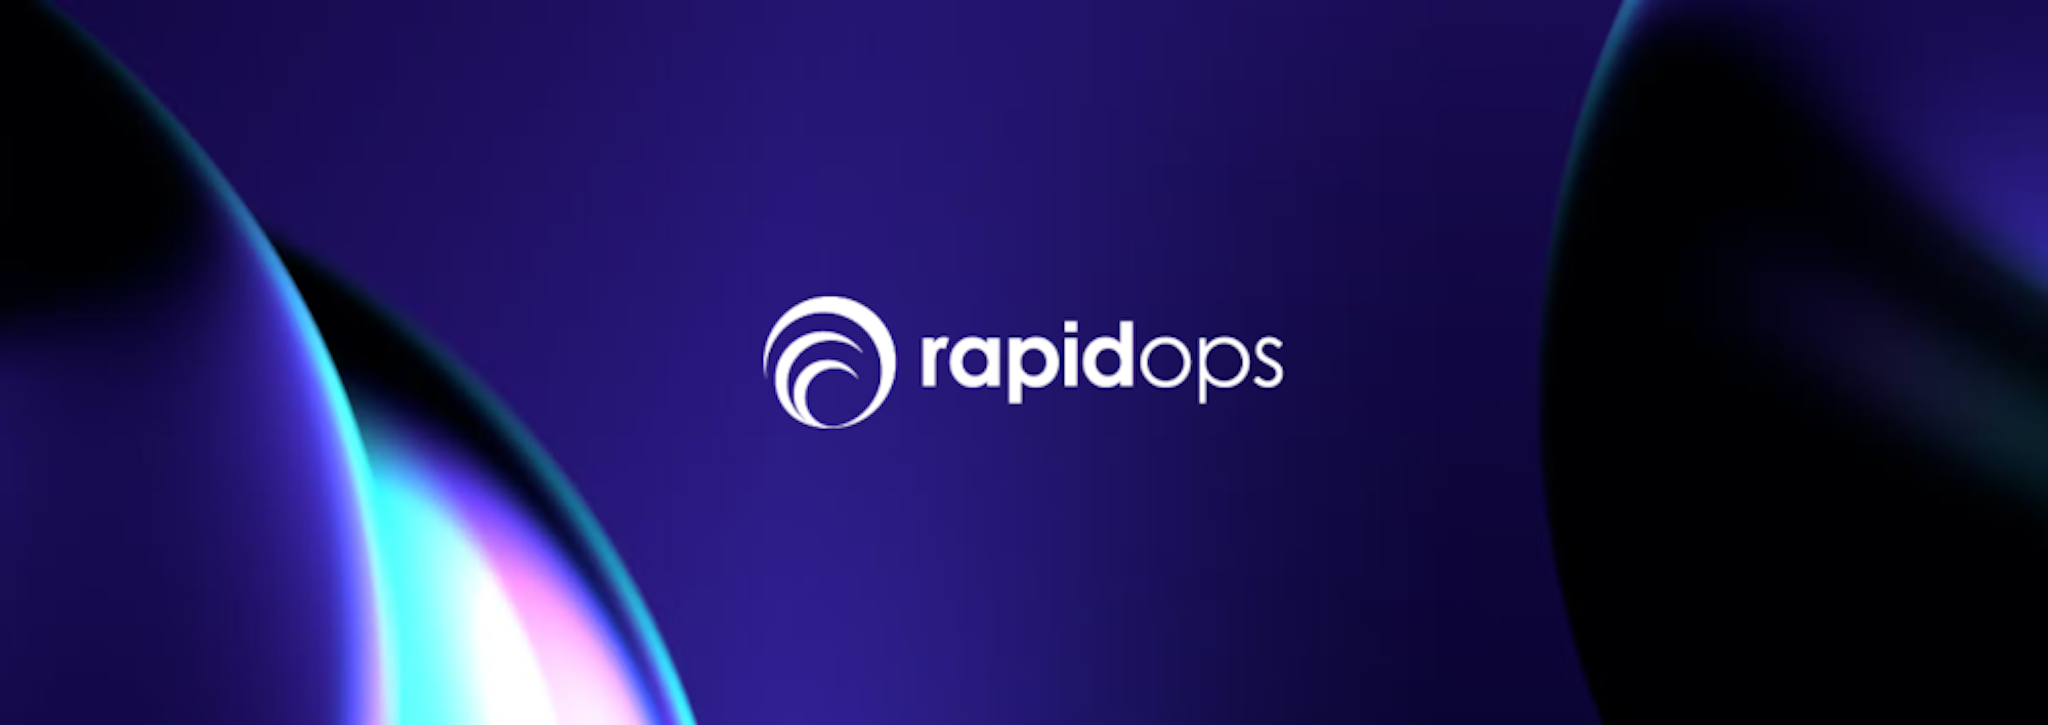 rapidops-thumbnail